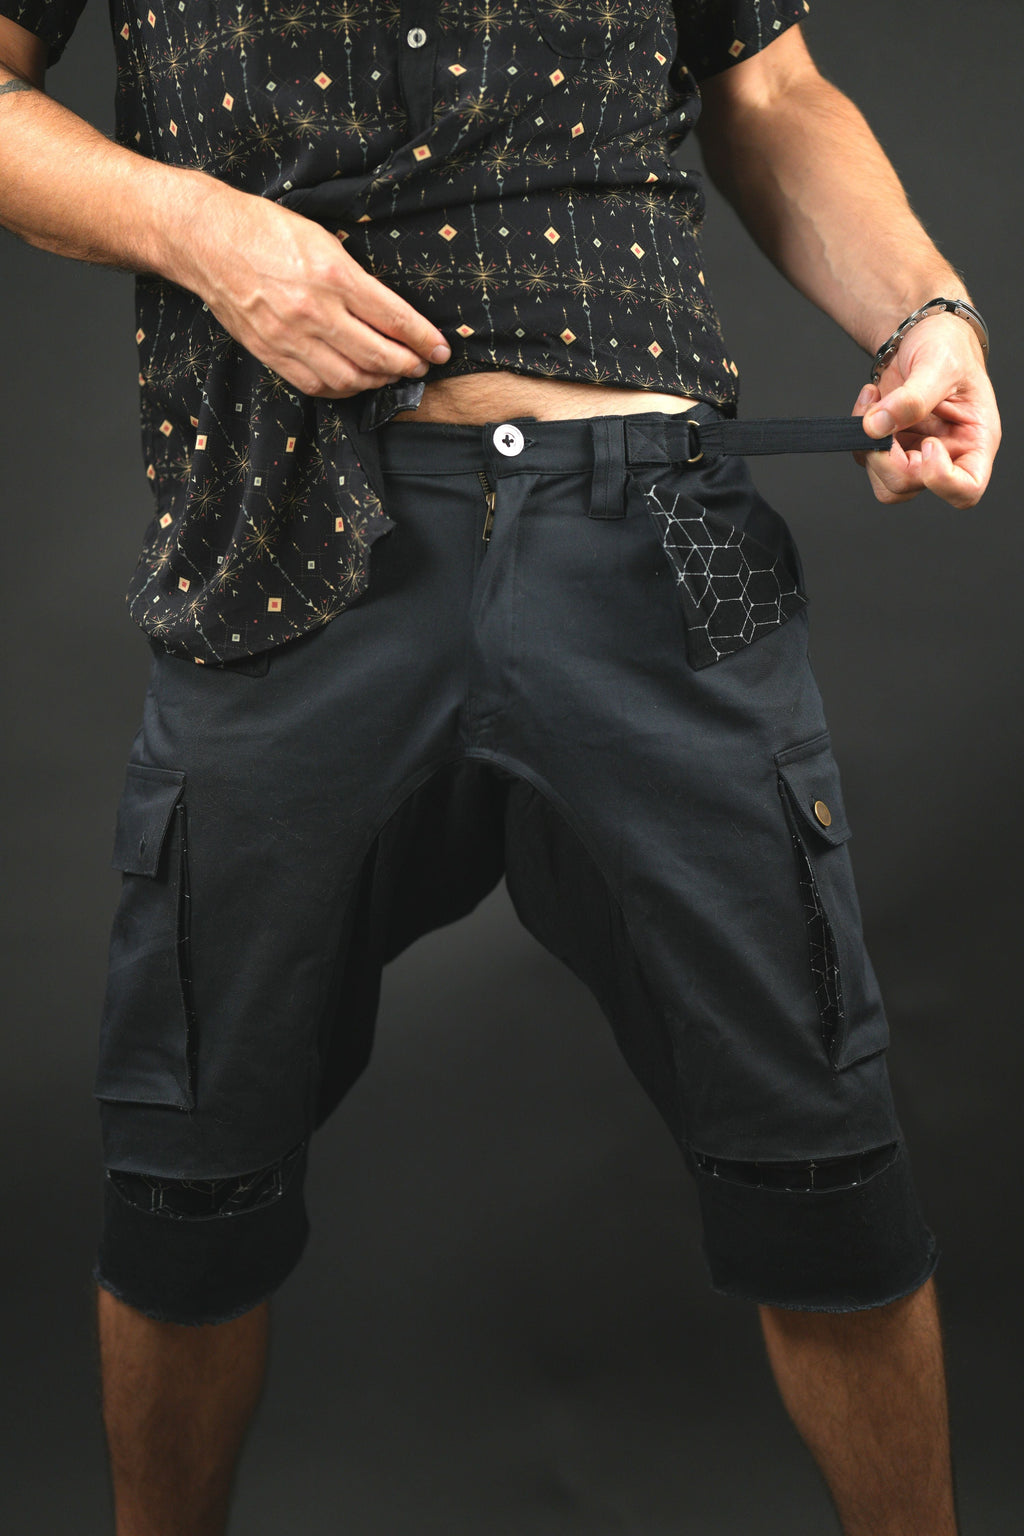 Drop Crotch Shorts for – Sheron Designs Men